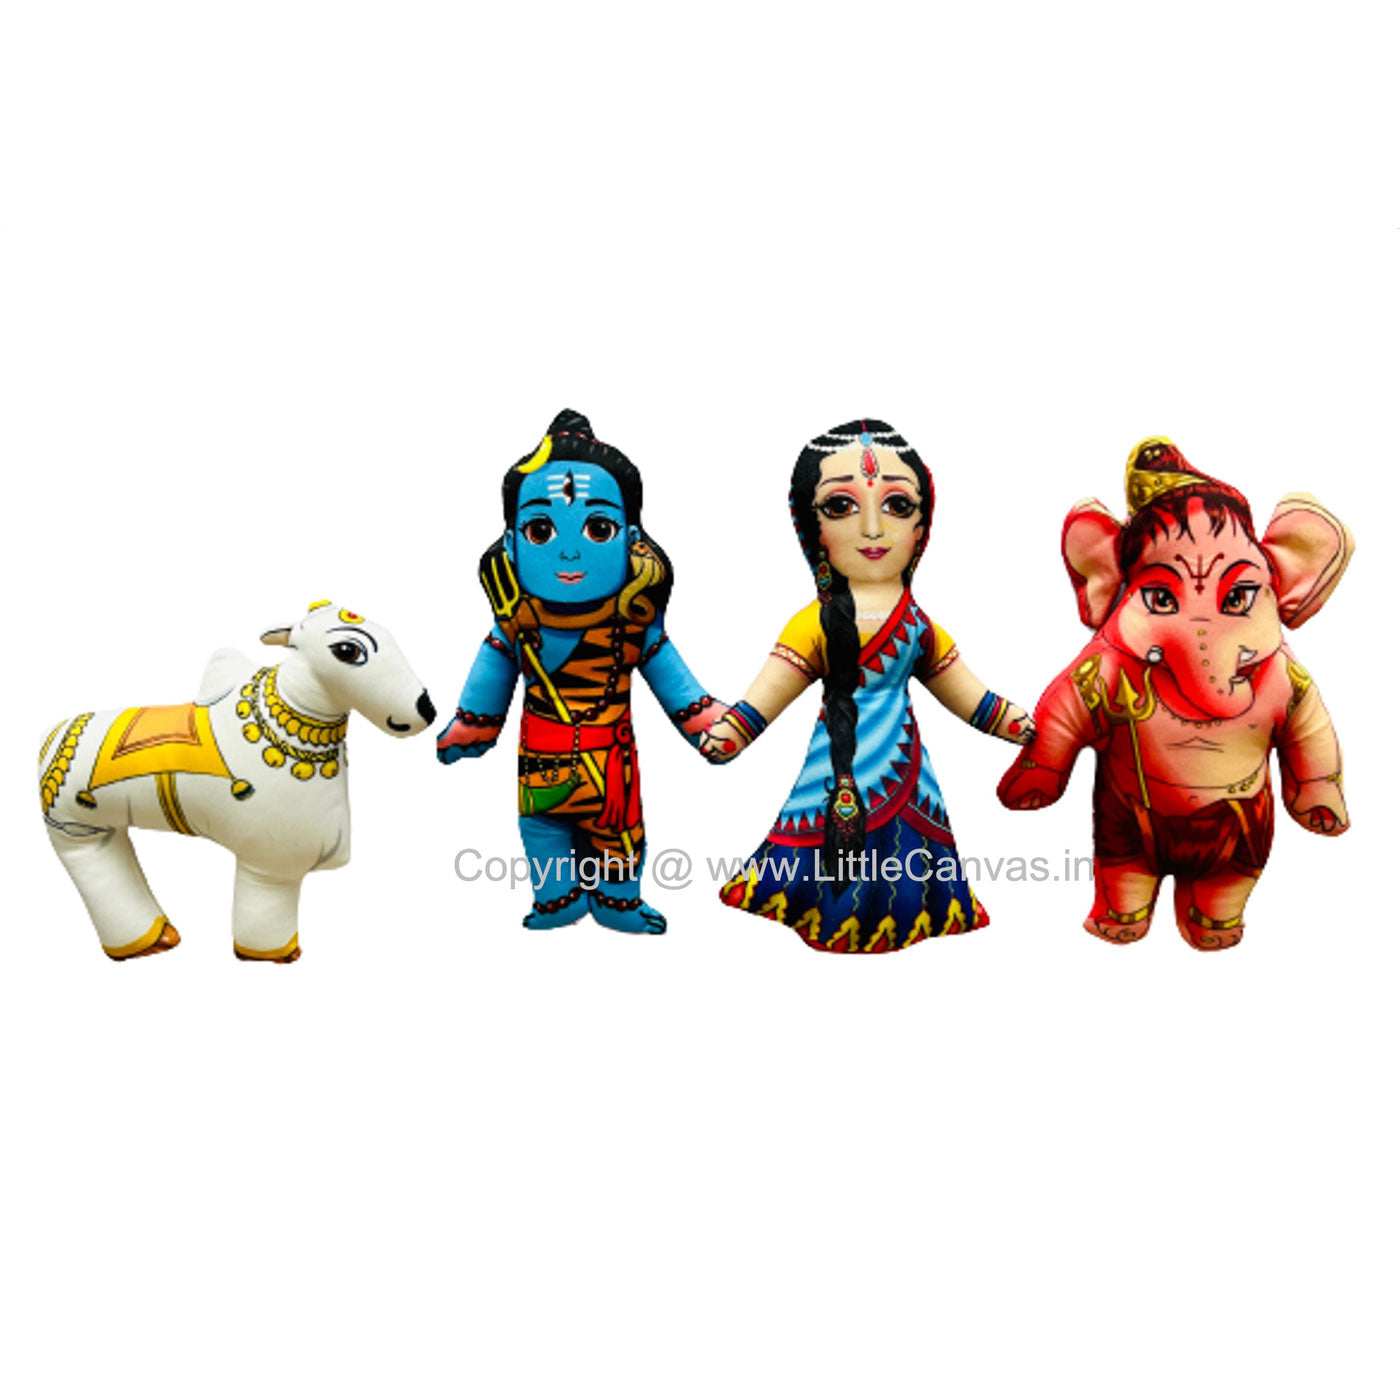 Lord Ganesha Plush Doll